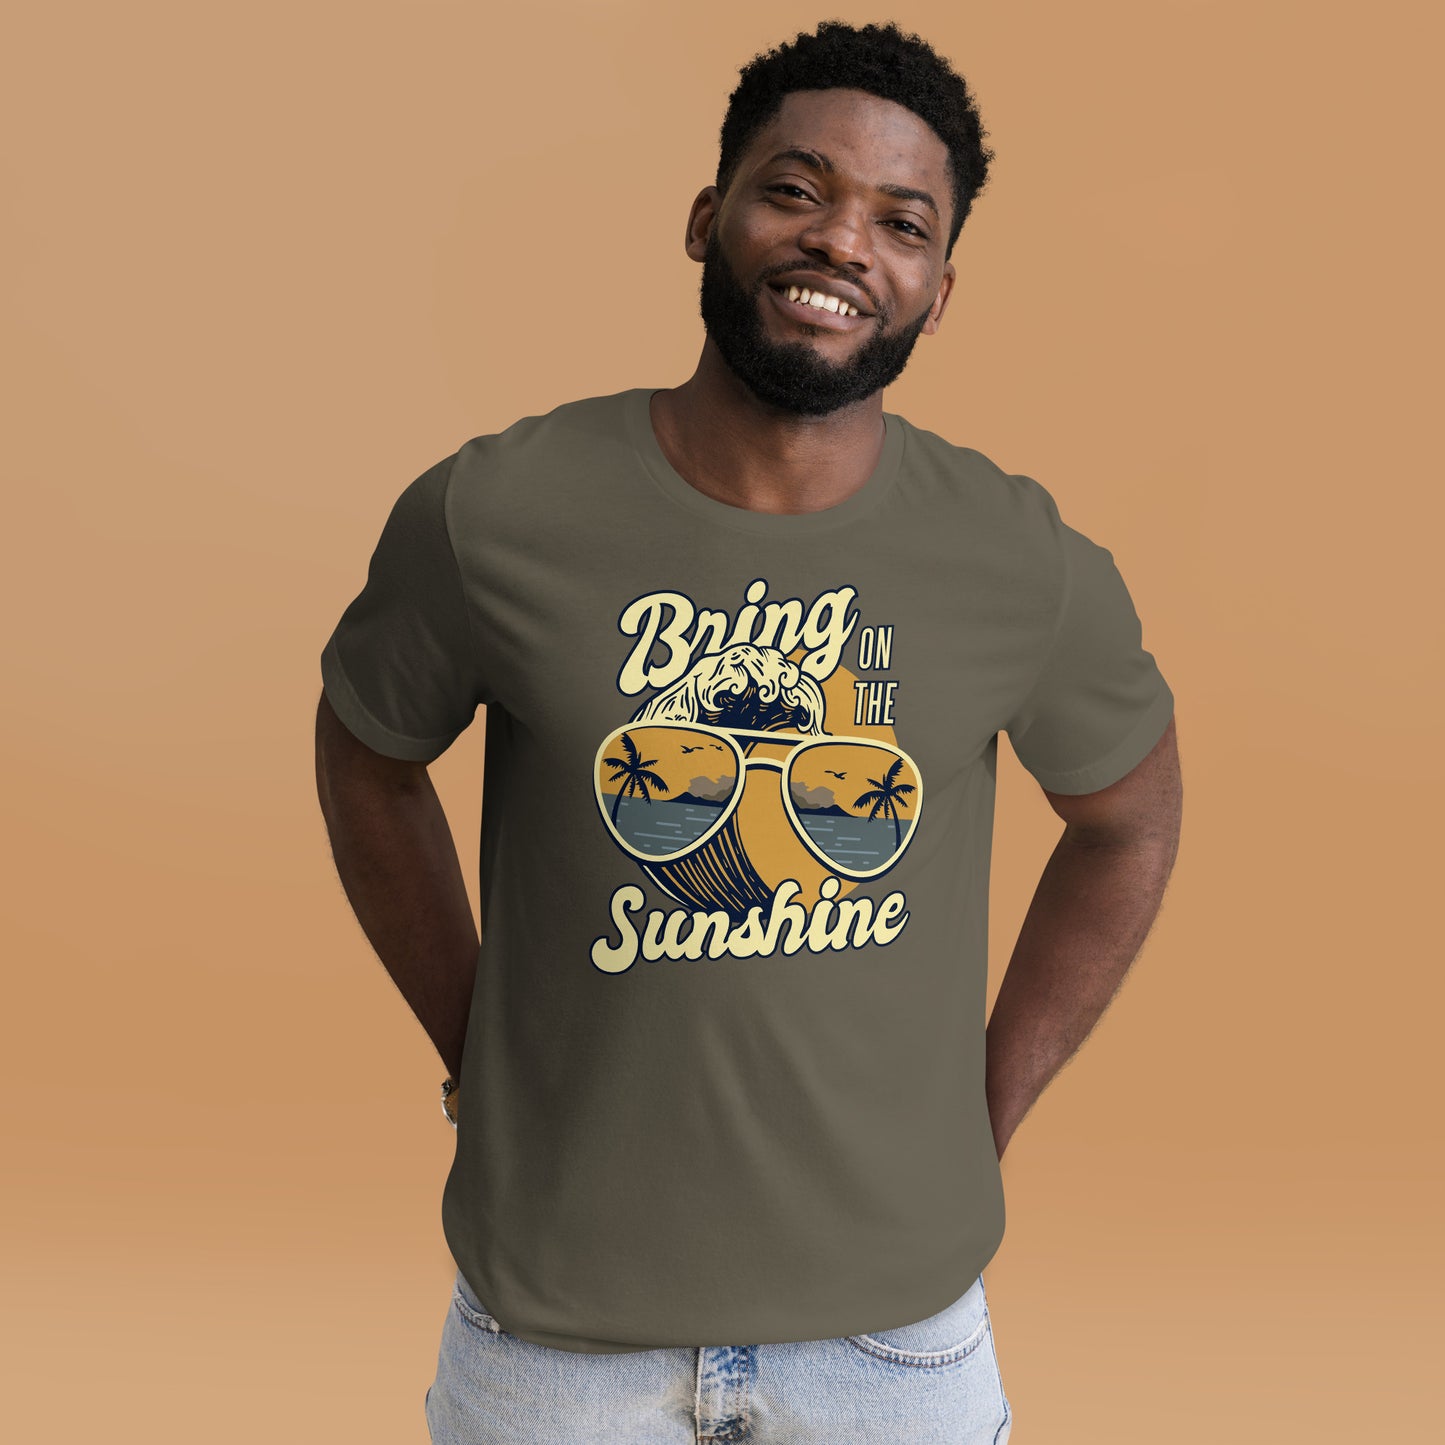 Bring on the sunshine T-shirt